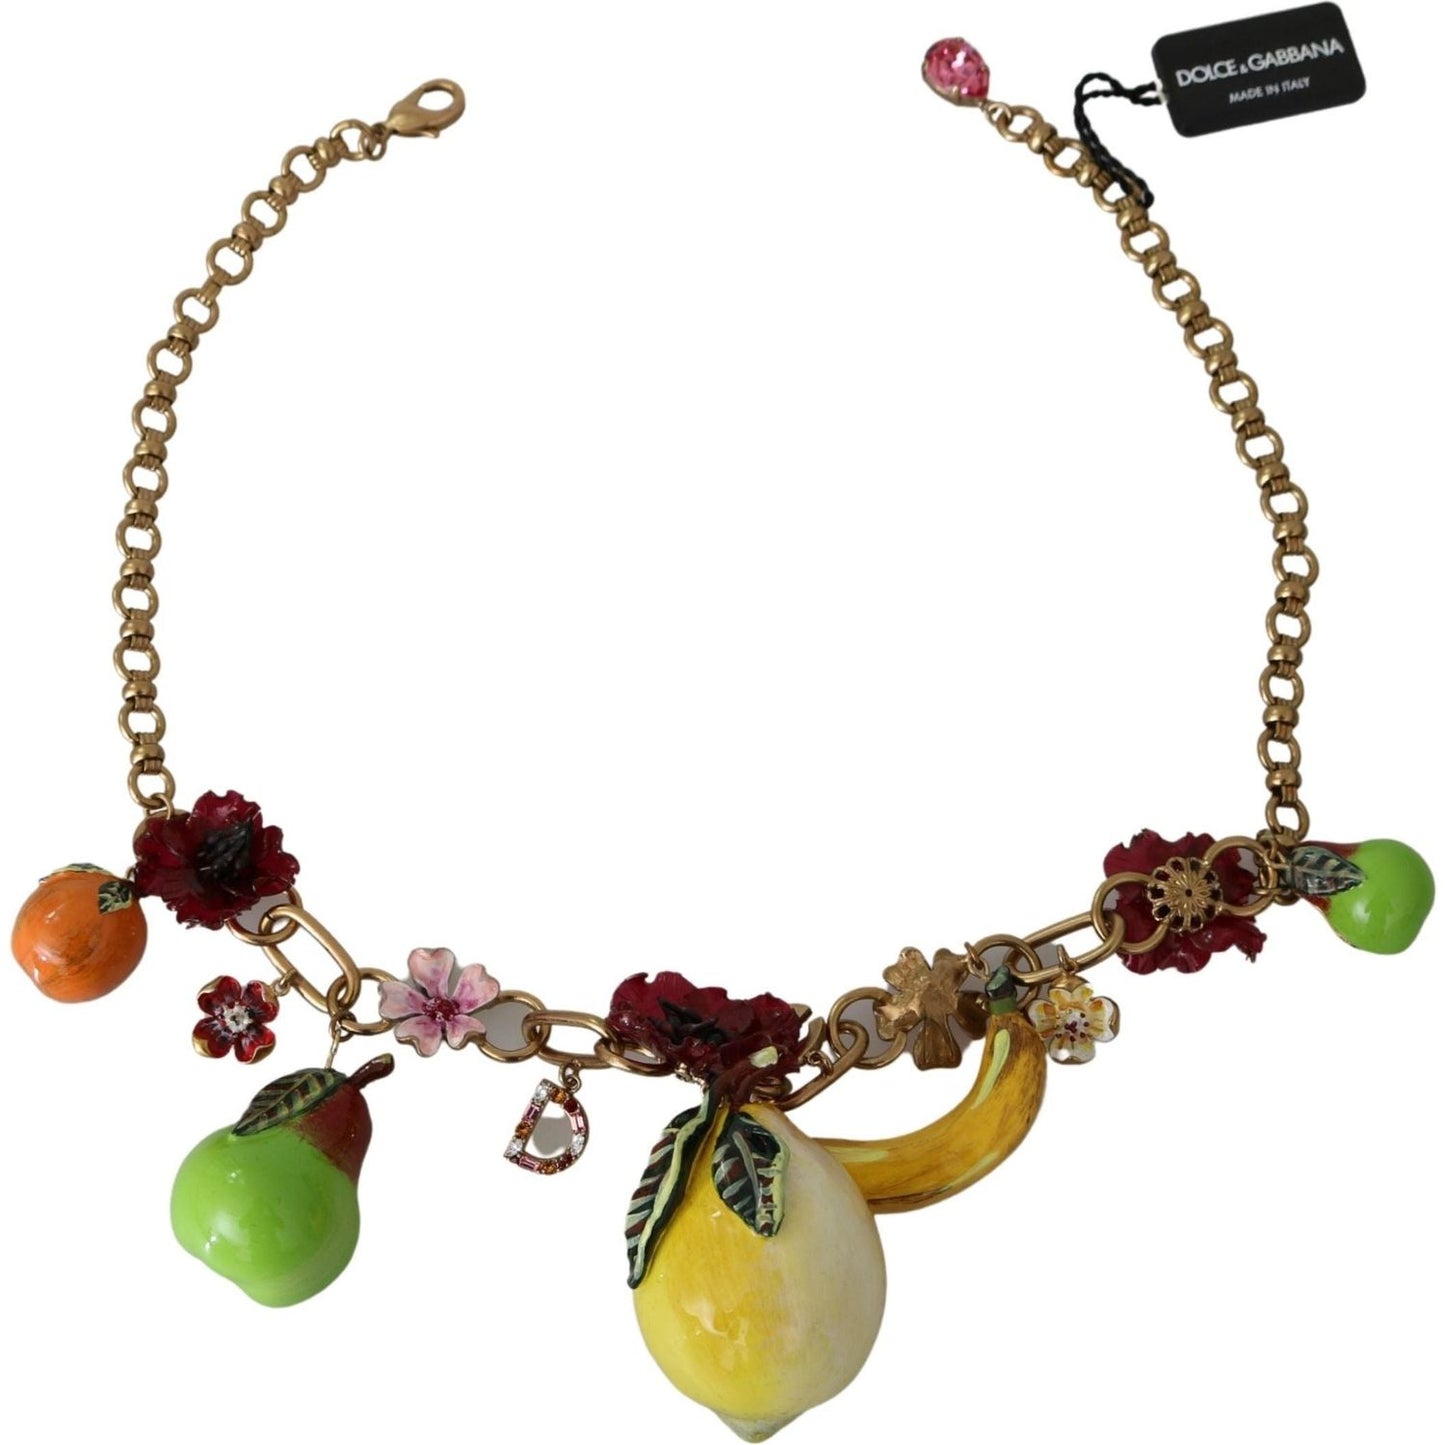 Dolce & Gabbana Crystal Embellished Floral Charm Necklace Necklace fruit-pendants-flowers-crystal-dg-logo-gold-brass-necklace IMG_2995-9a1a439b-8b1.jpg